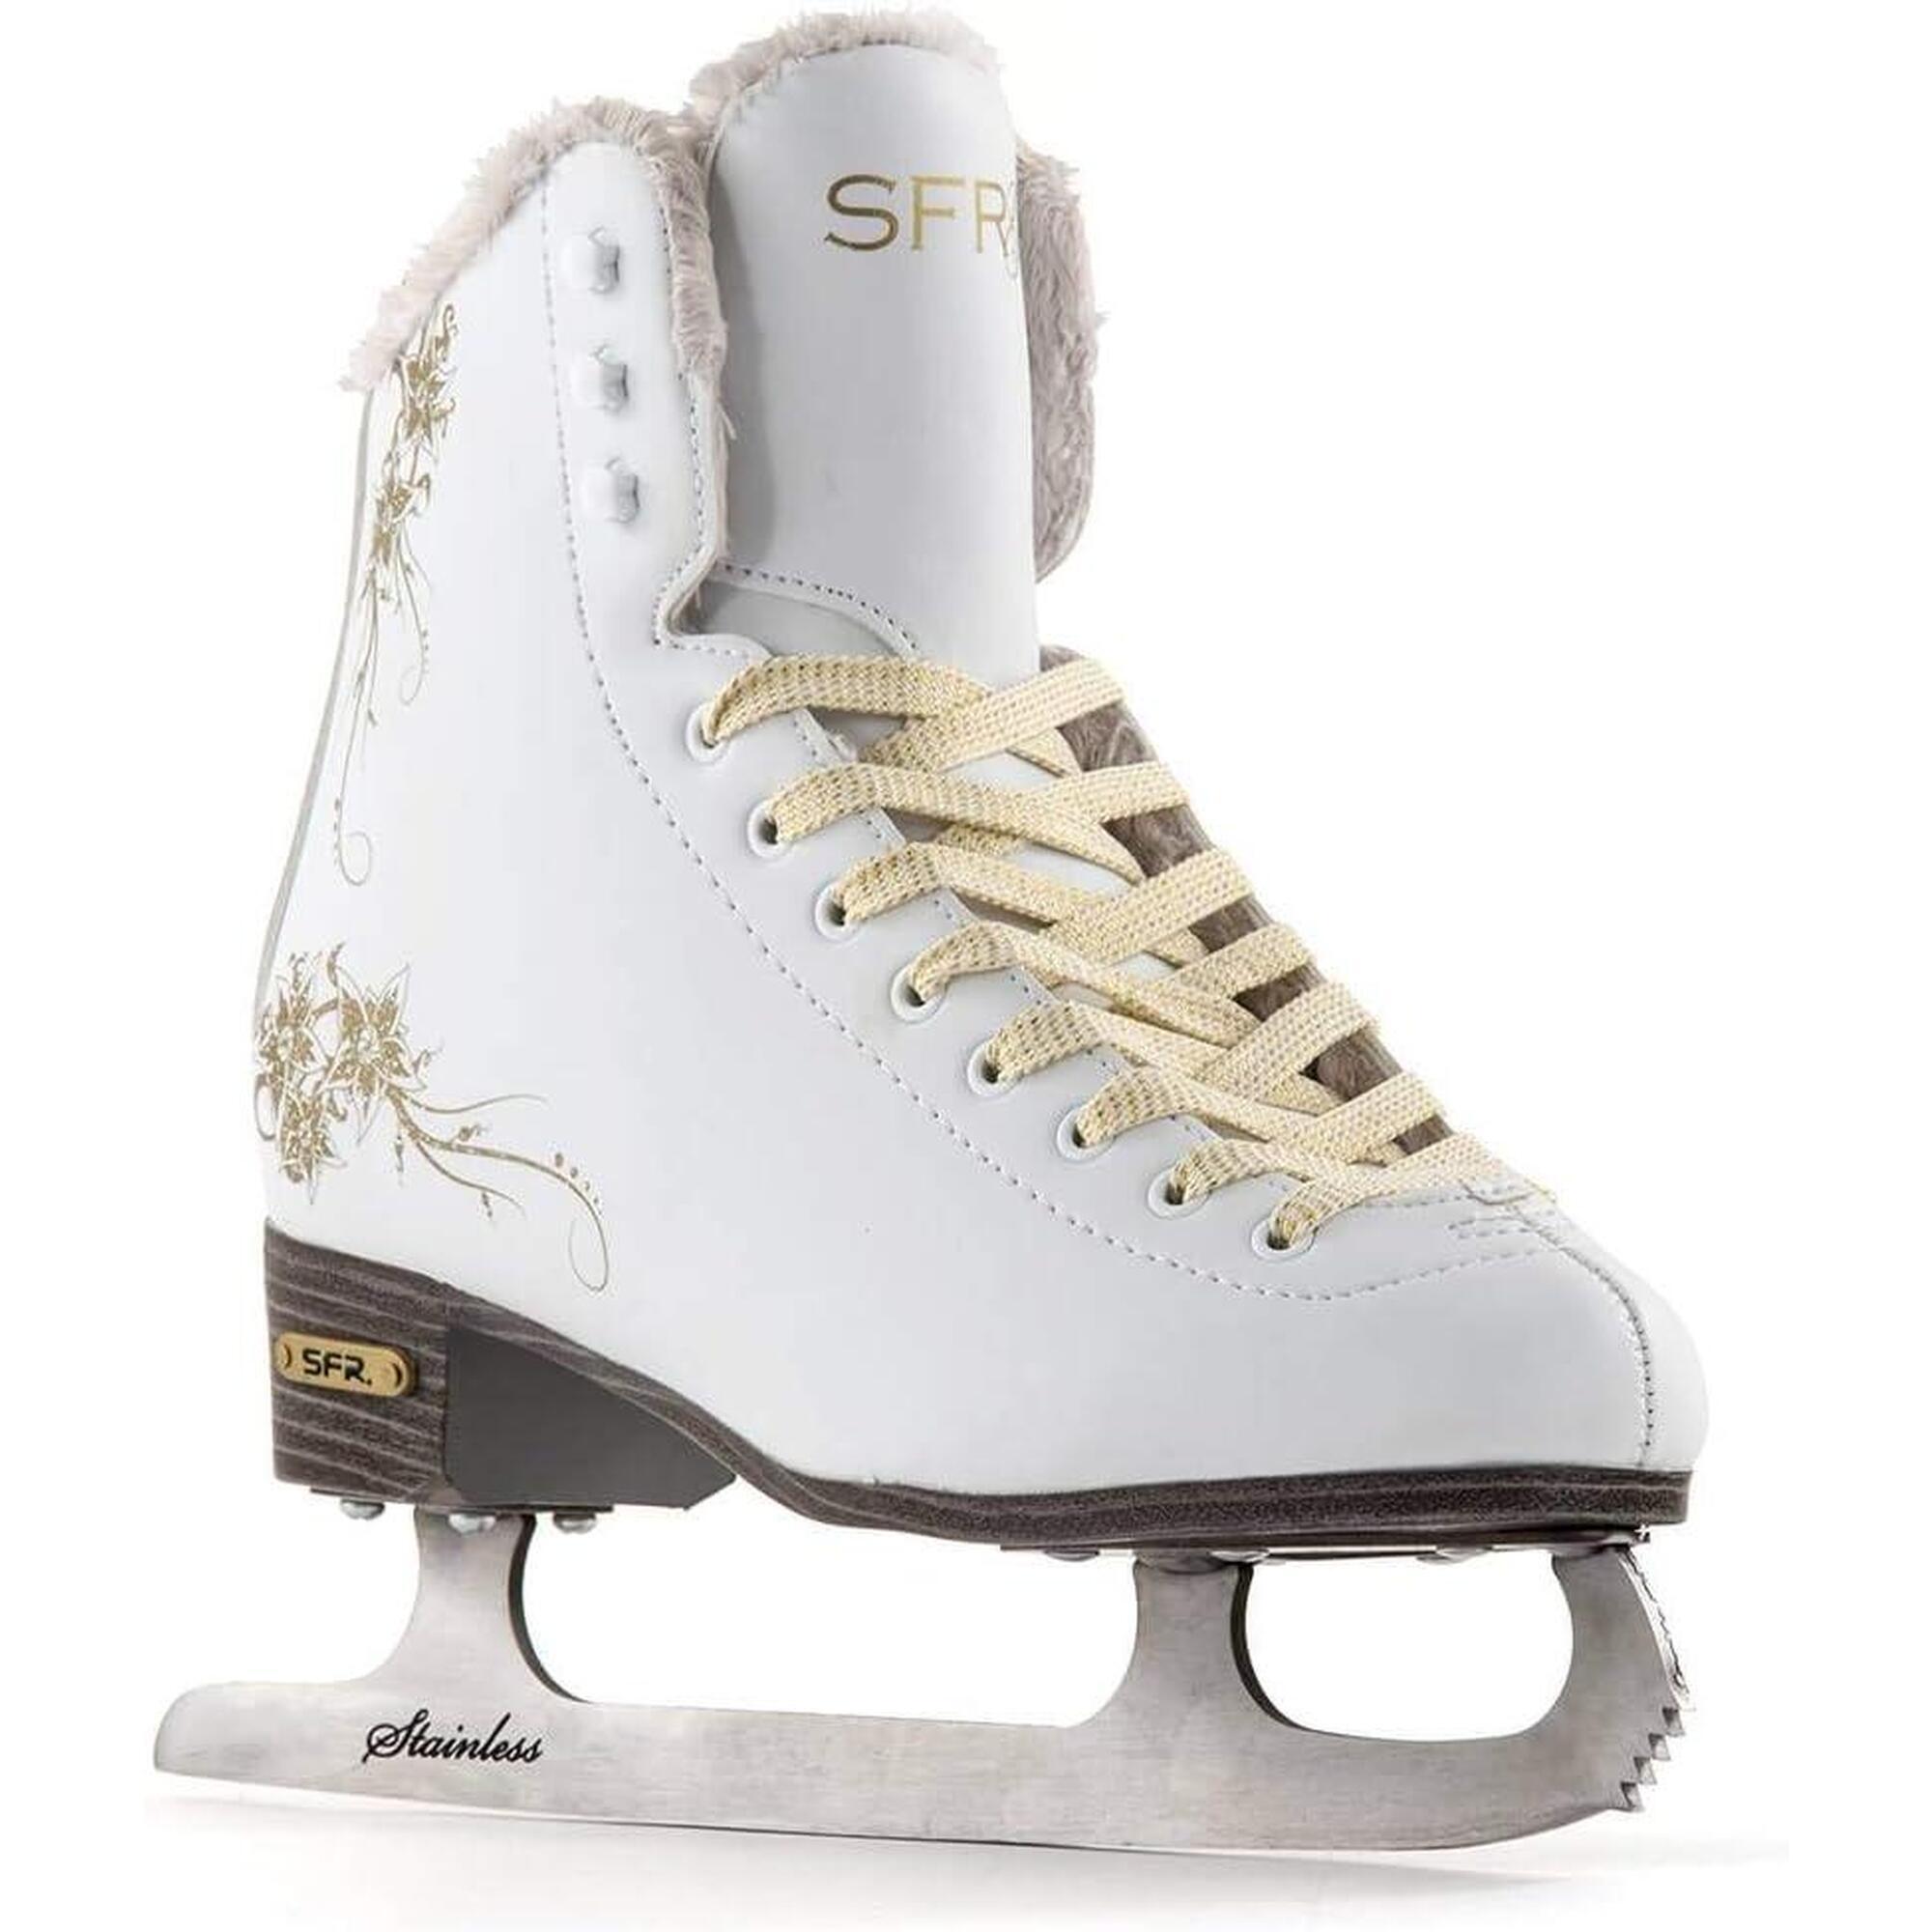 SFR Glitra White Ice Skates - Size: UK 8